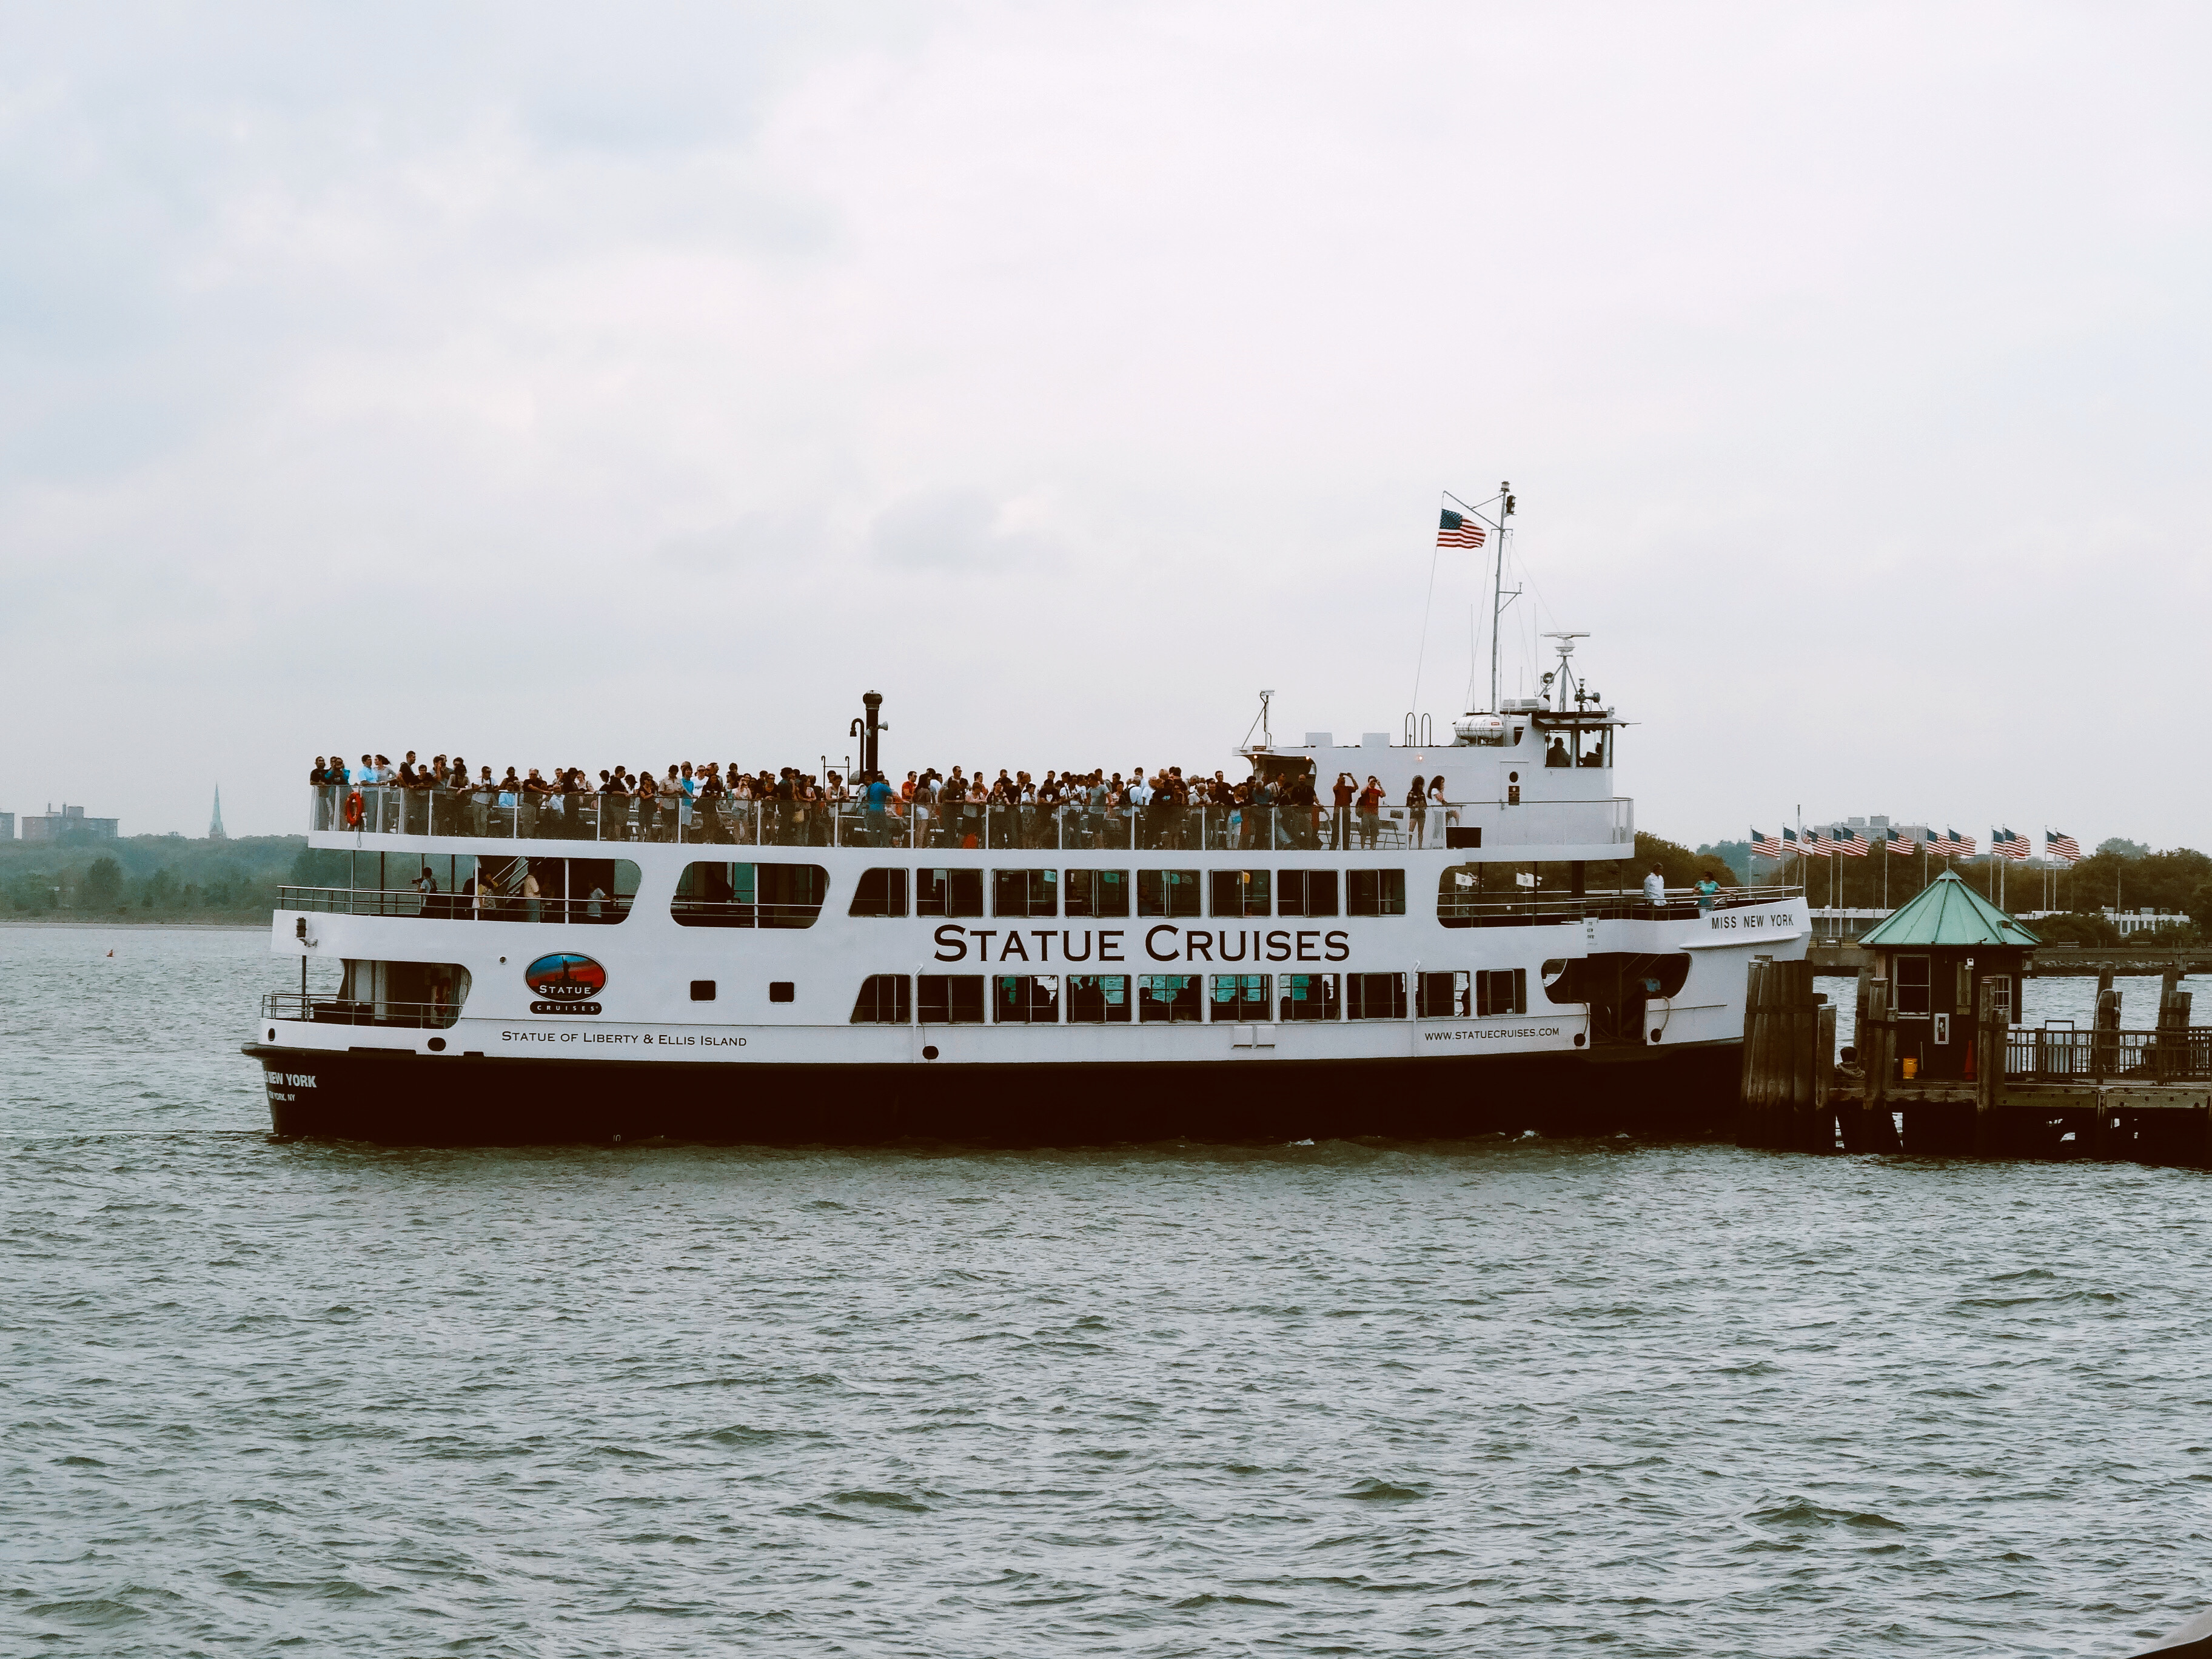 tour boat near new york